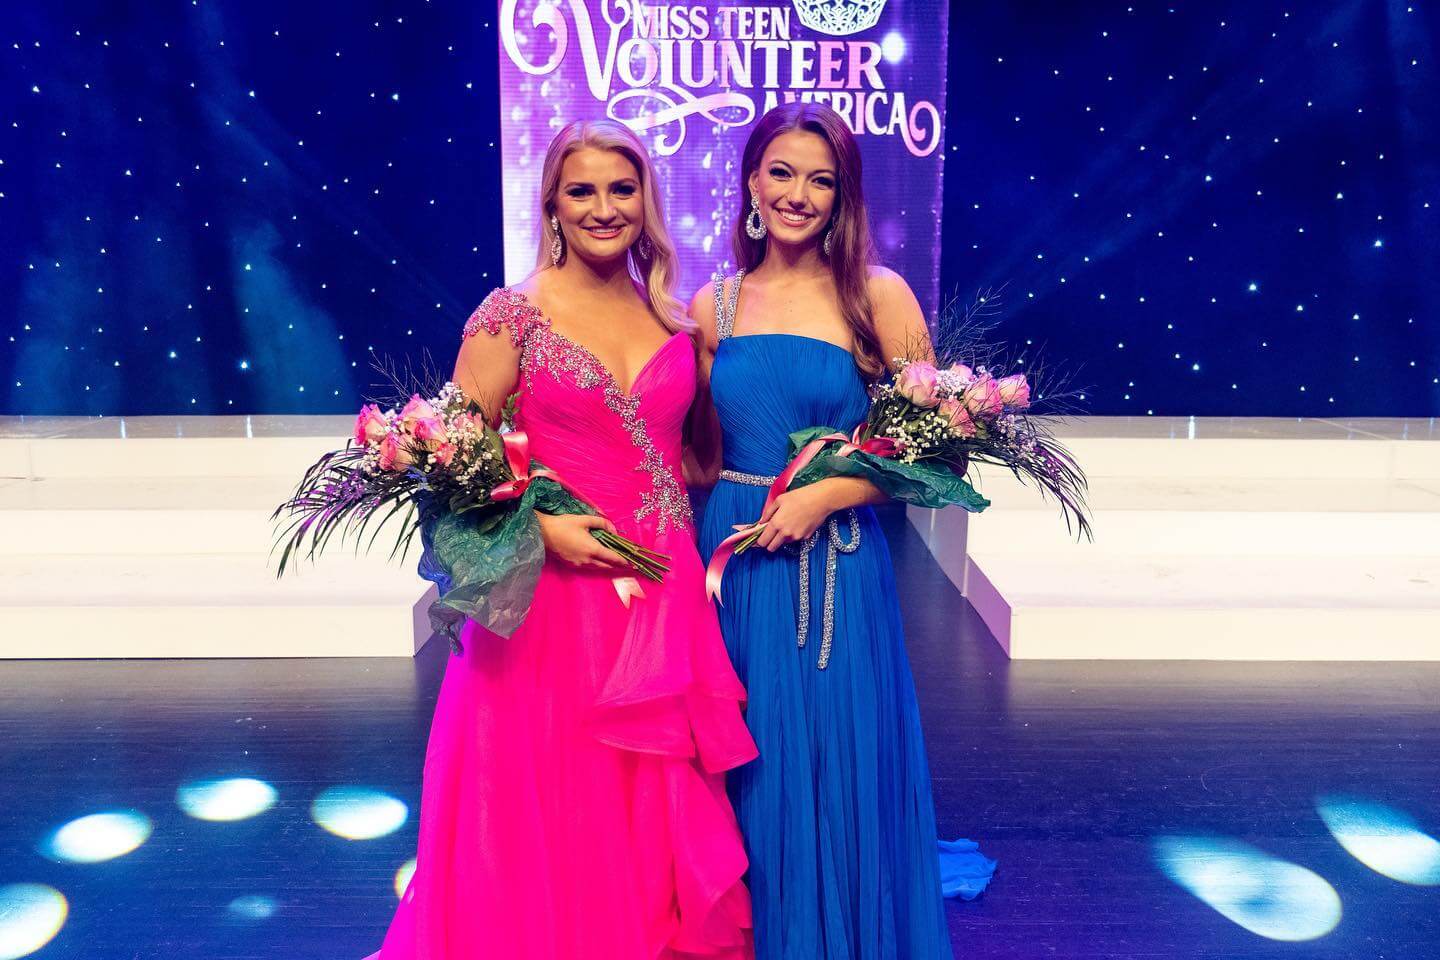 Thursday Night Preliminary Winners: (L to R) Talent Preliminary Winner: Miss North Carolina Teen Volunteer, Andi Creech & Fitness & Wellness Preliminary Winner: Miss Iowa Teen Volunteer, Grace Smithey